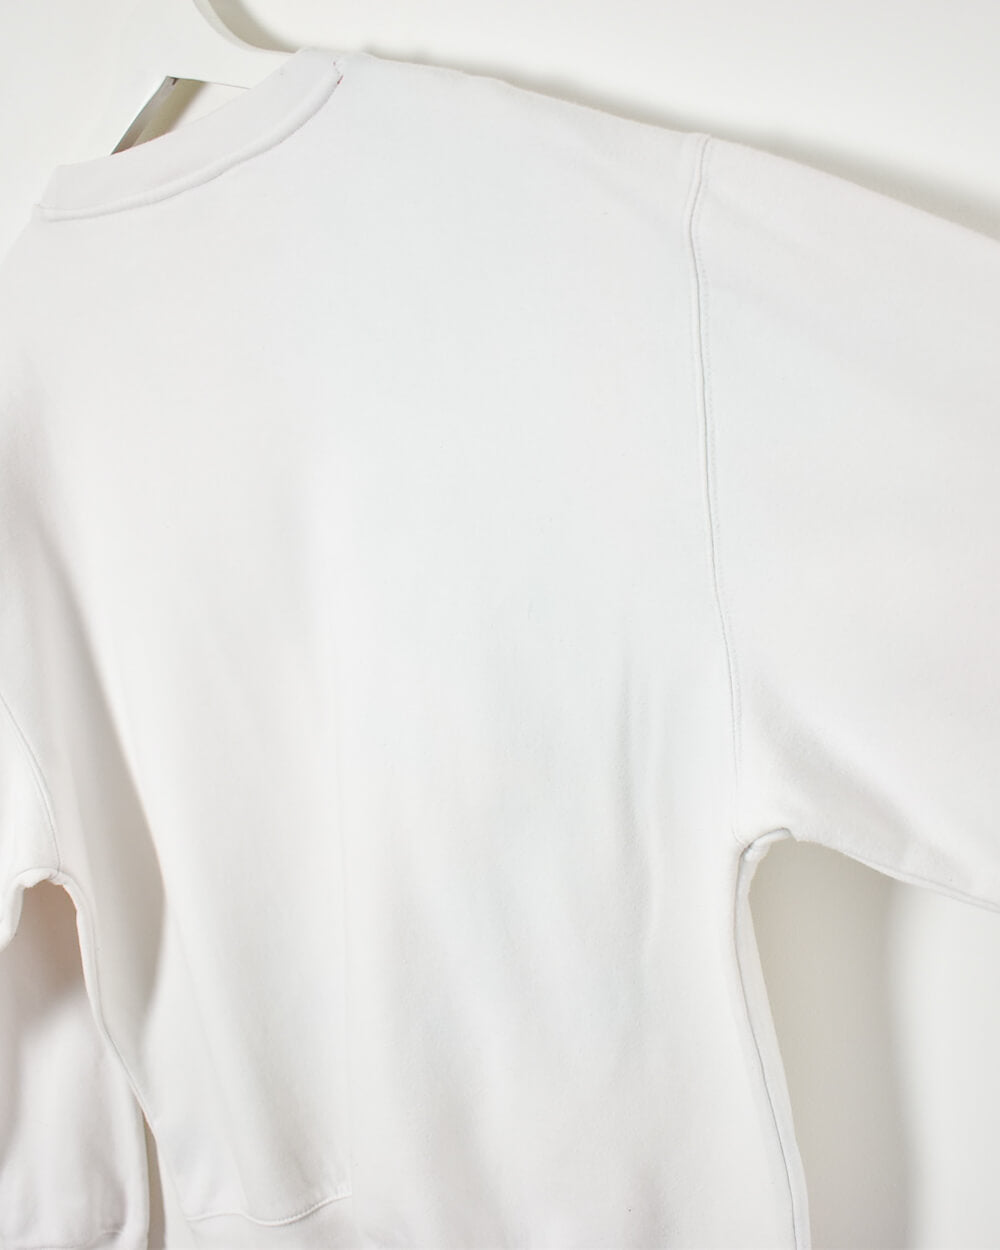 Fila Sweatshirt - X-Large - Domno Vintage 90s, 80s, 00s Retro and Vintage Clothing 